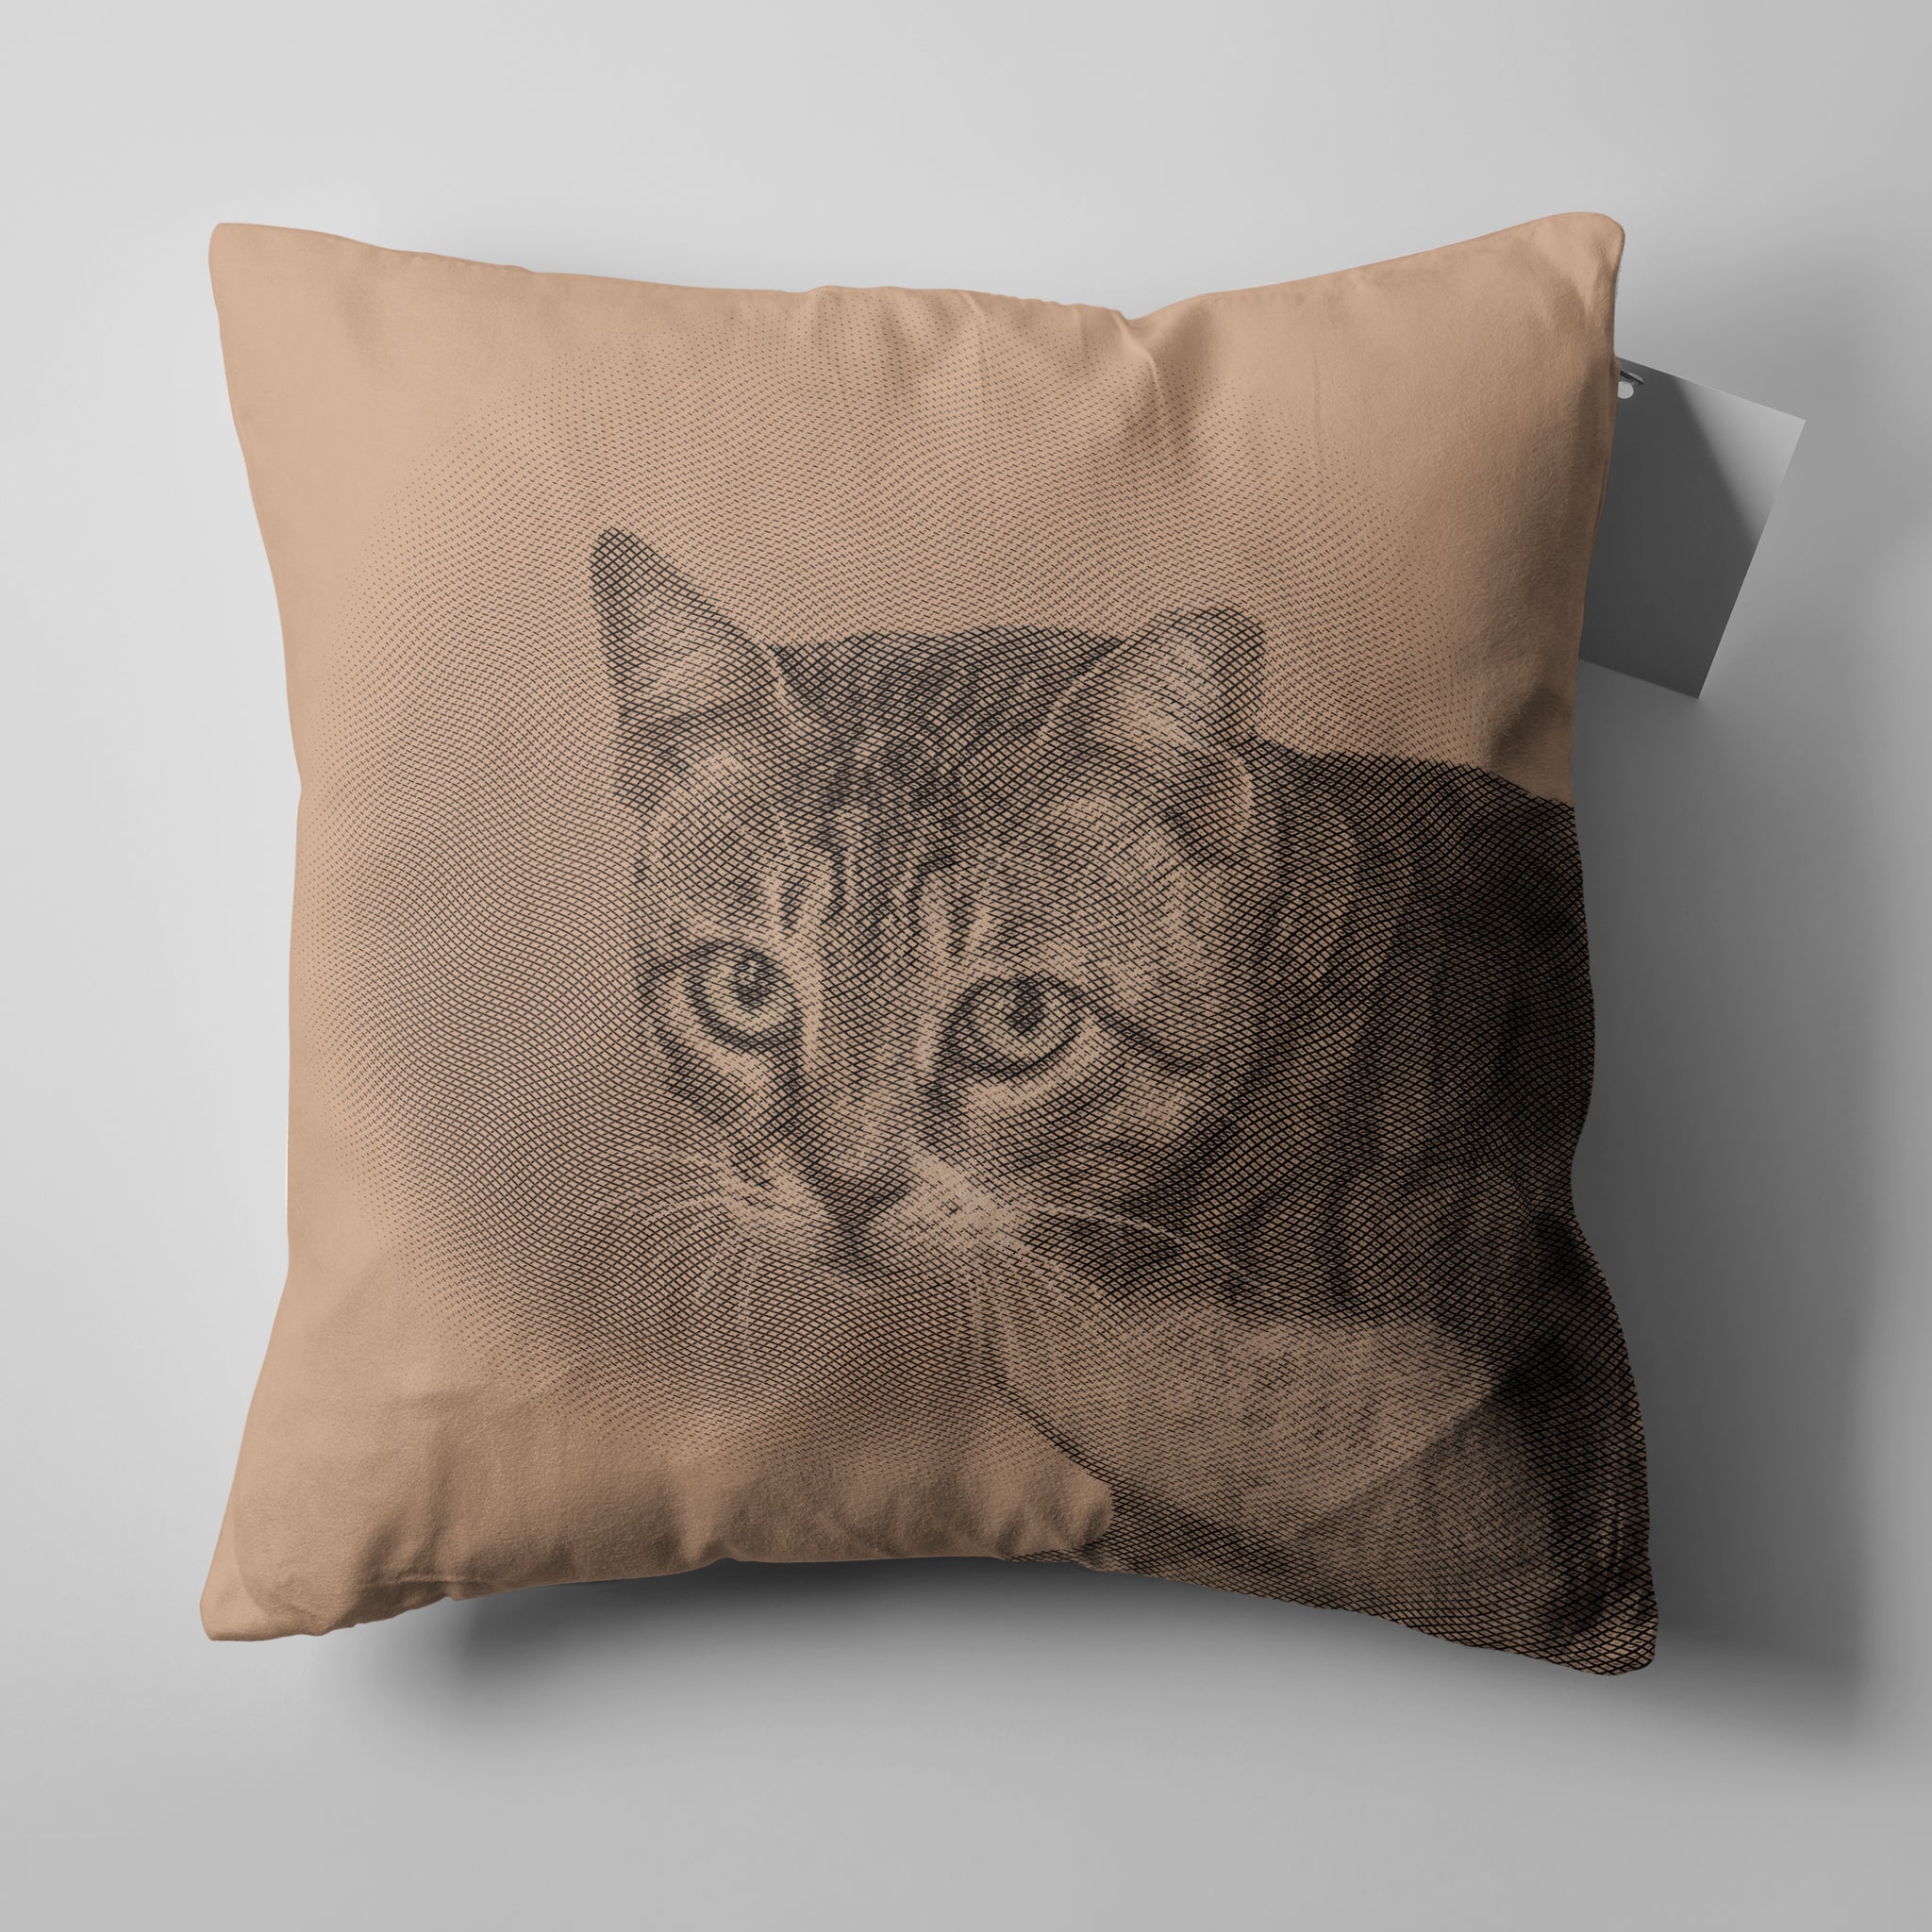 throw pillows - brick - includes your pet design